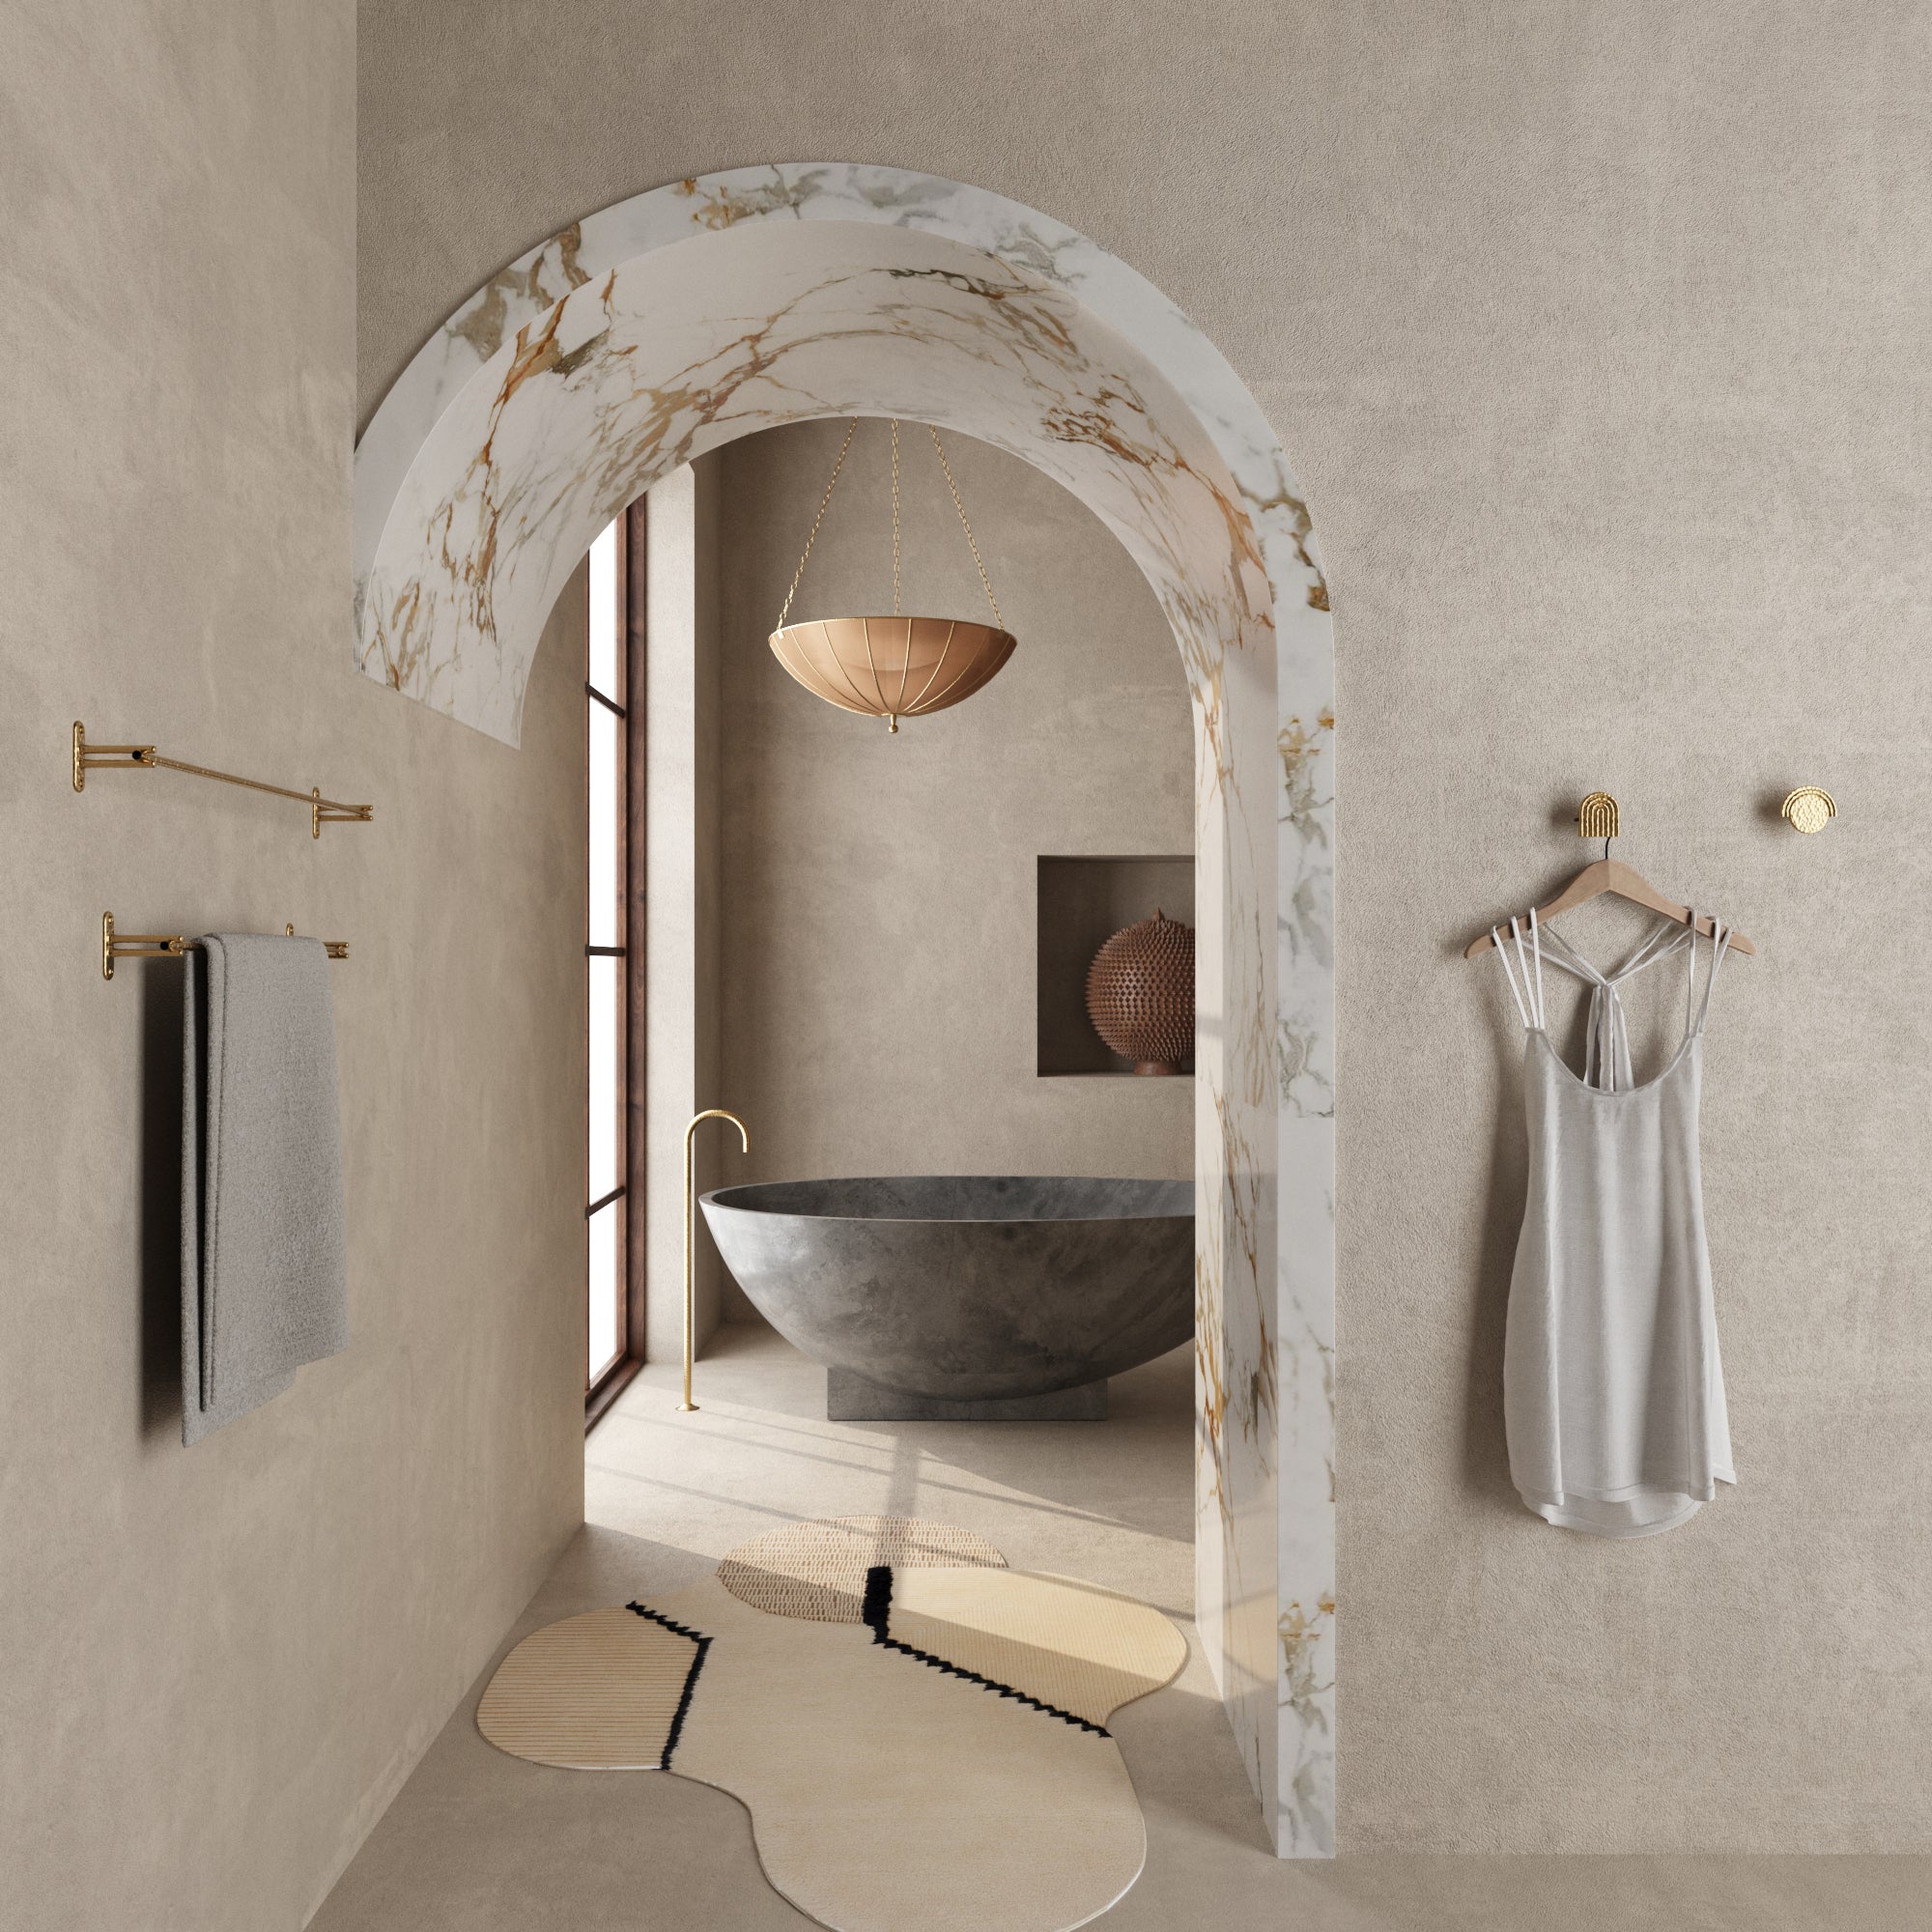 Mi&Gei: Luxury Door, Kitchen & Bathroom Accessories